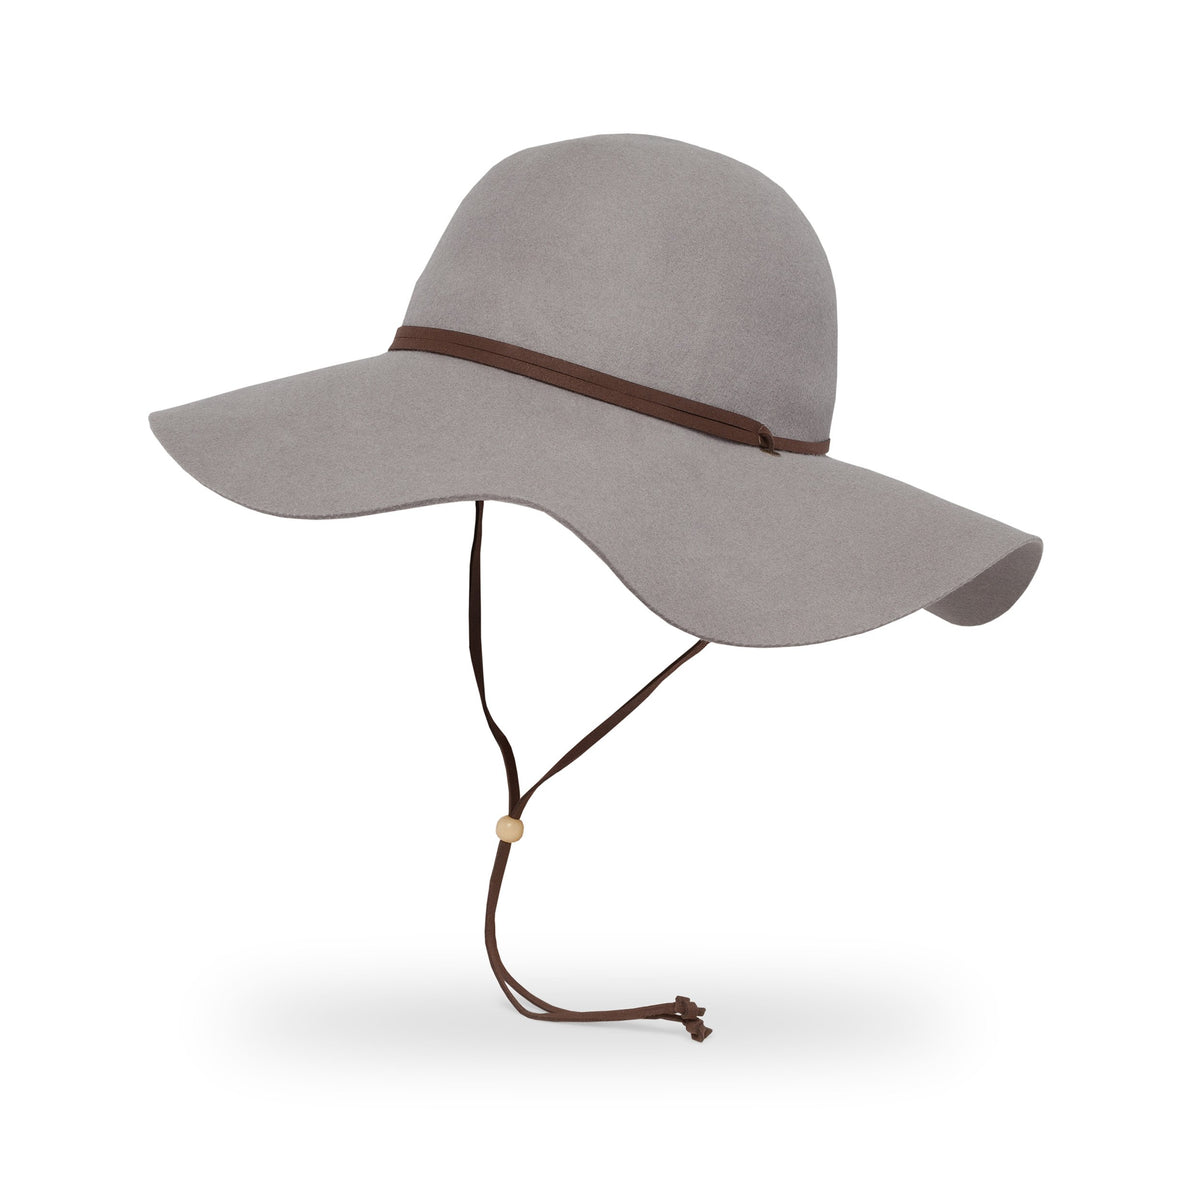 Winter Bucket Hats For Women Autumn Caring Fisherman Hat Elegant